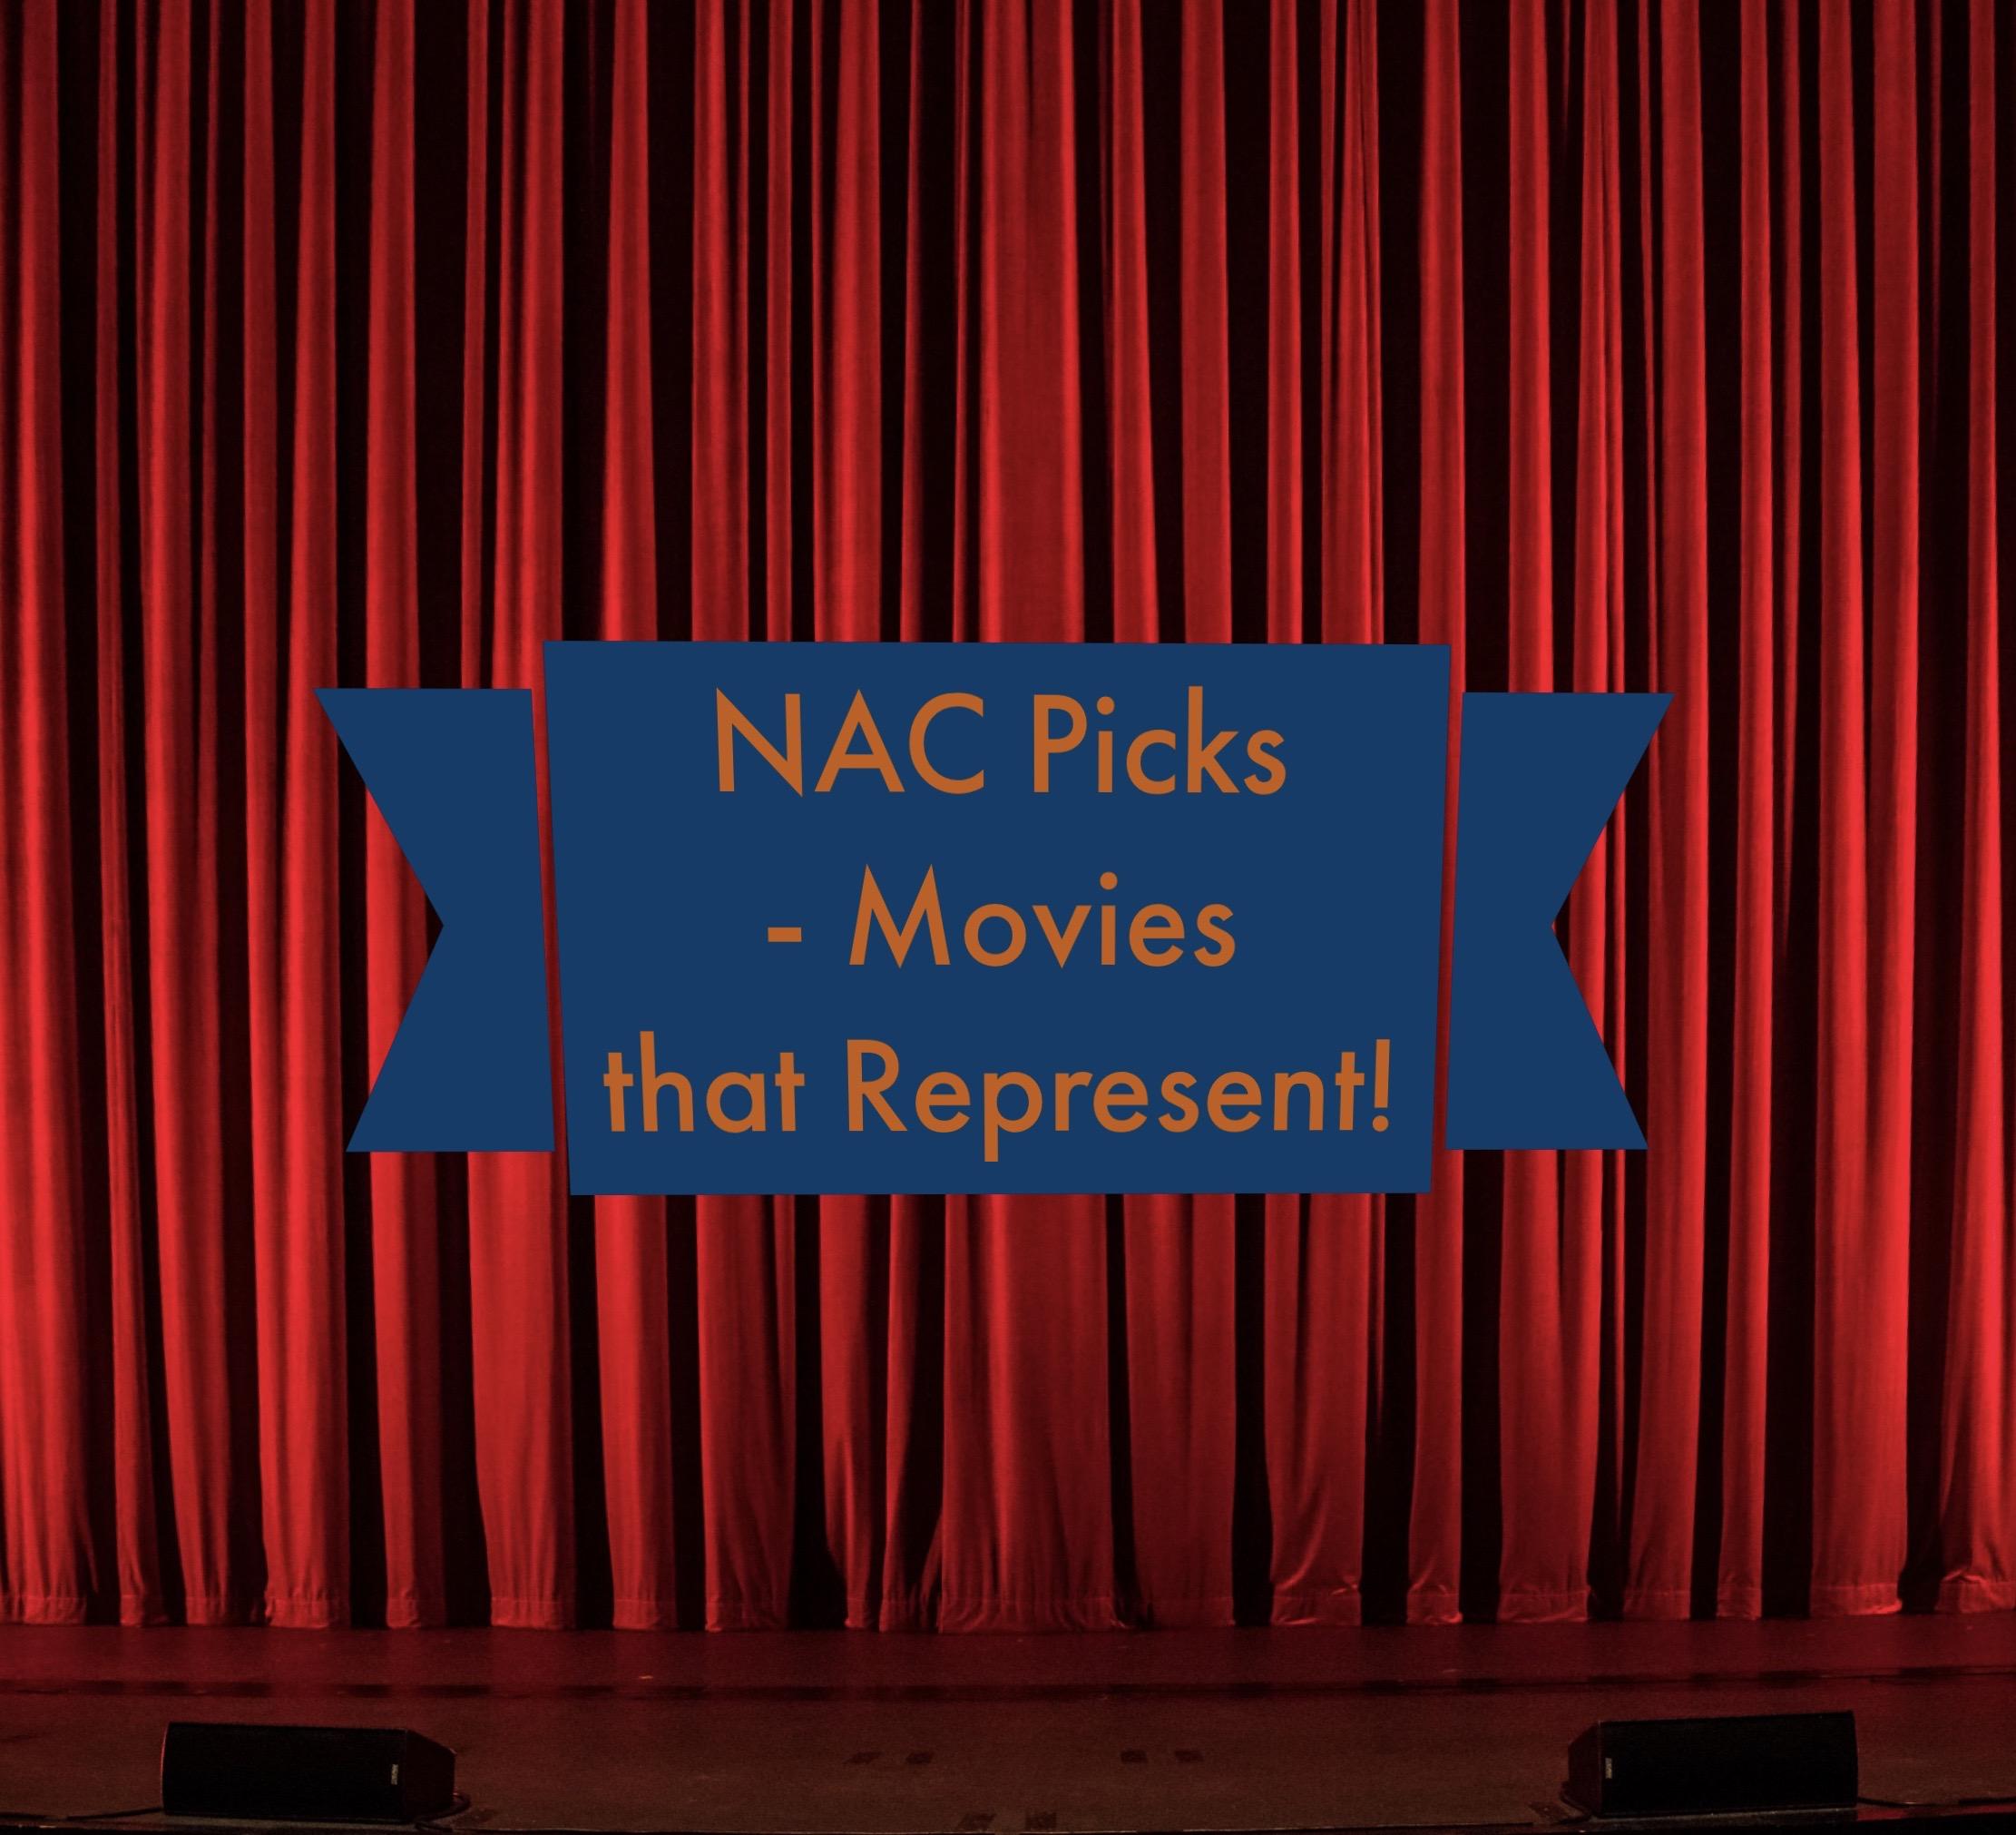 nac-picks-movies-that-represent